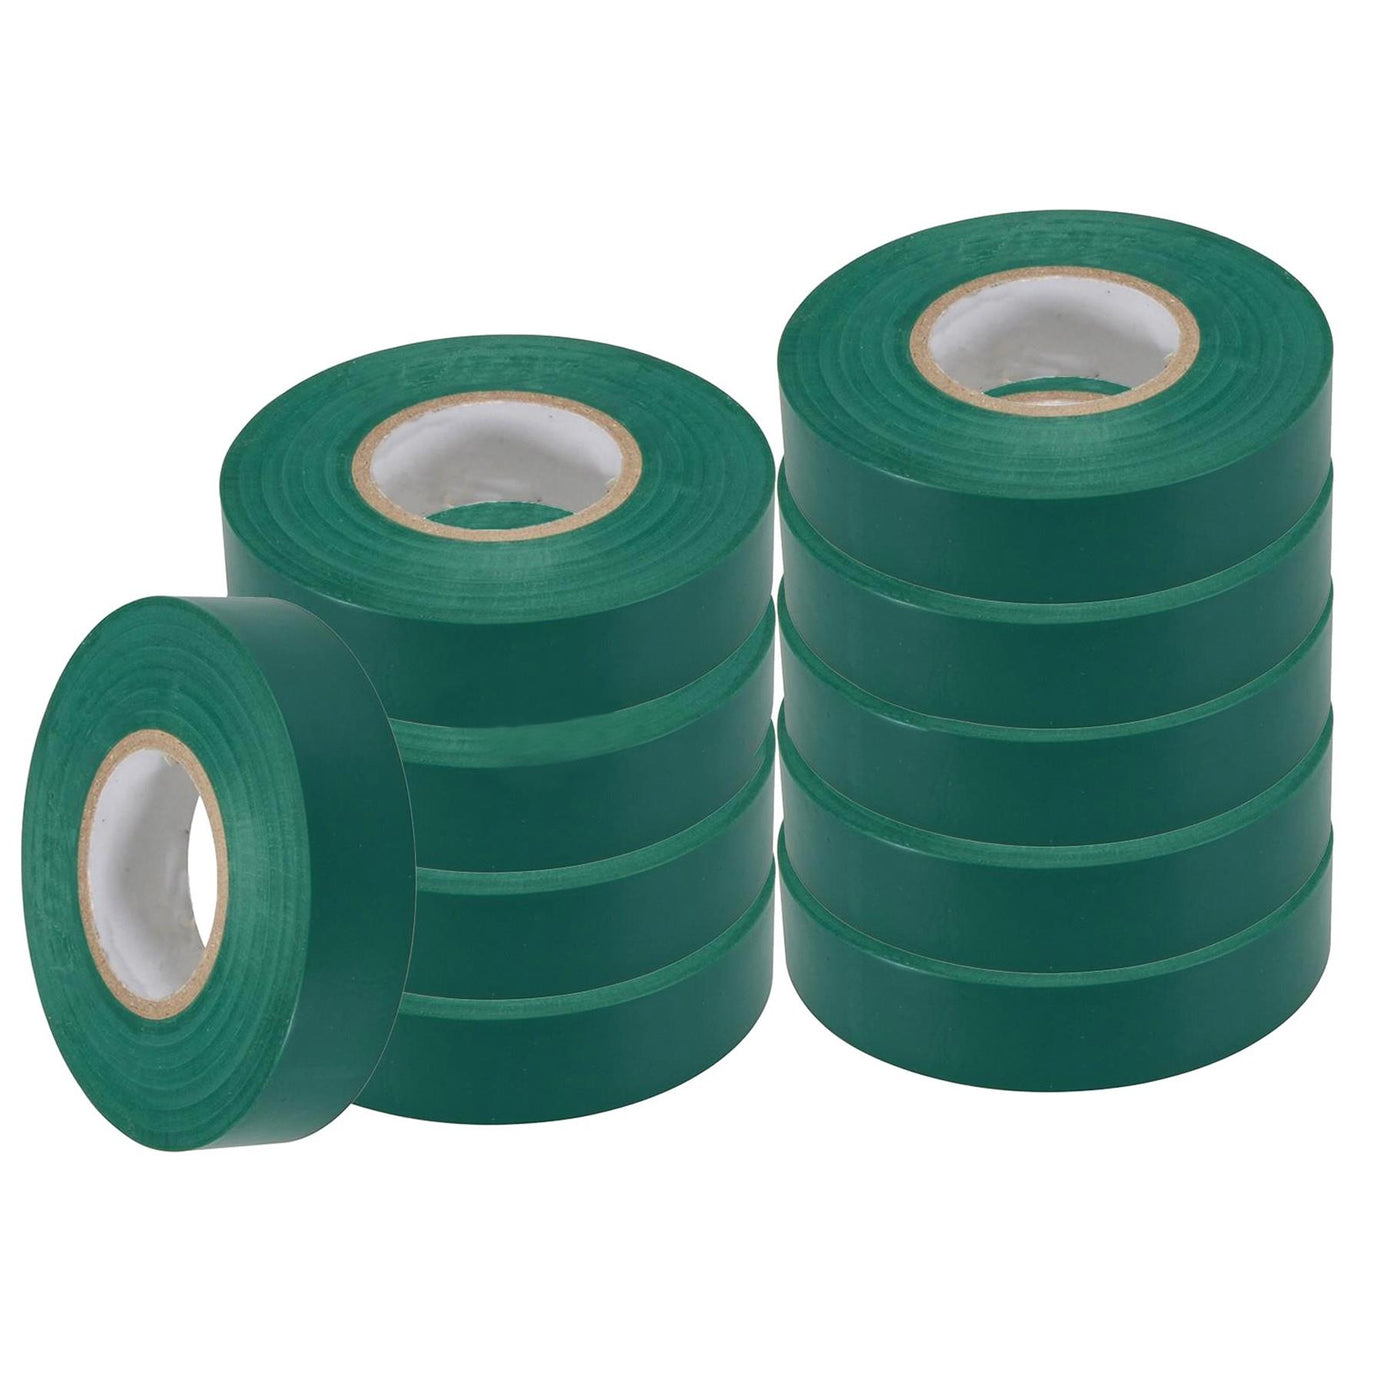 Electrical Pvc Insulation Insulating Tape 22m Flame Retardant Rolls Green 10 Rolls